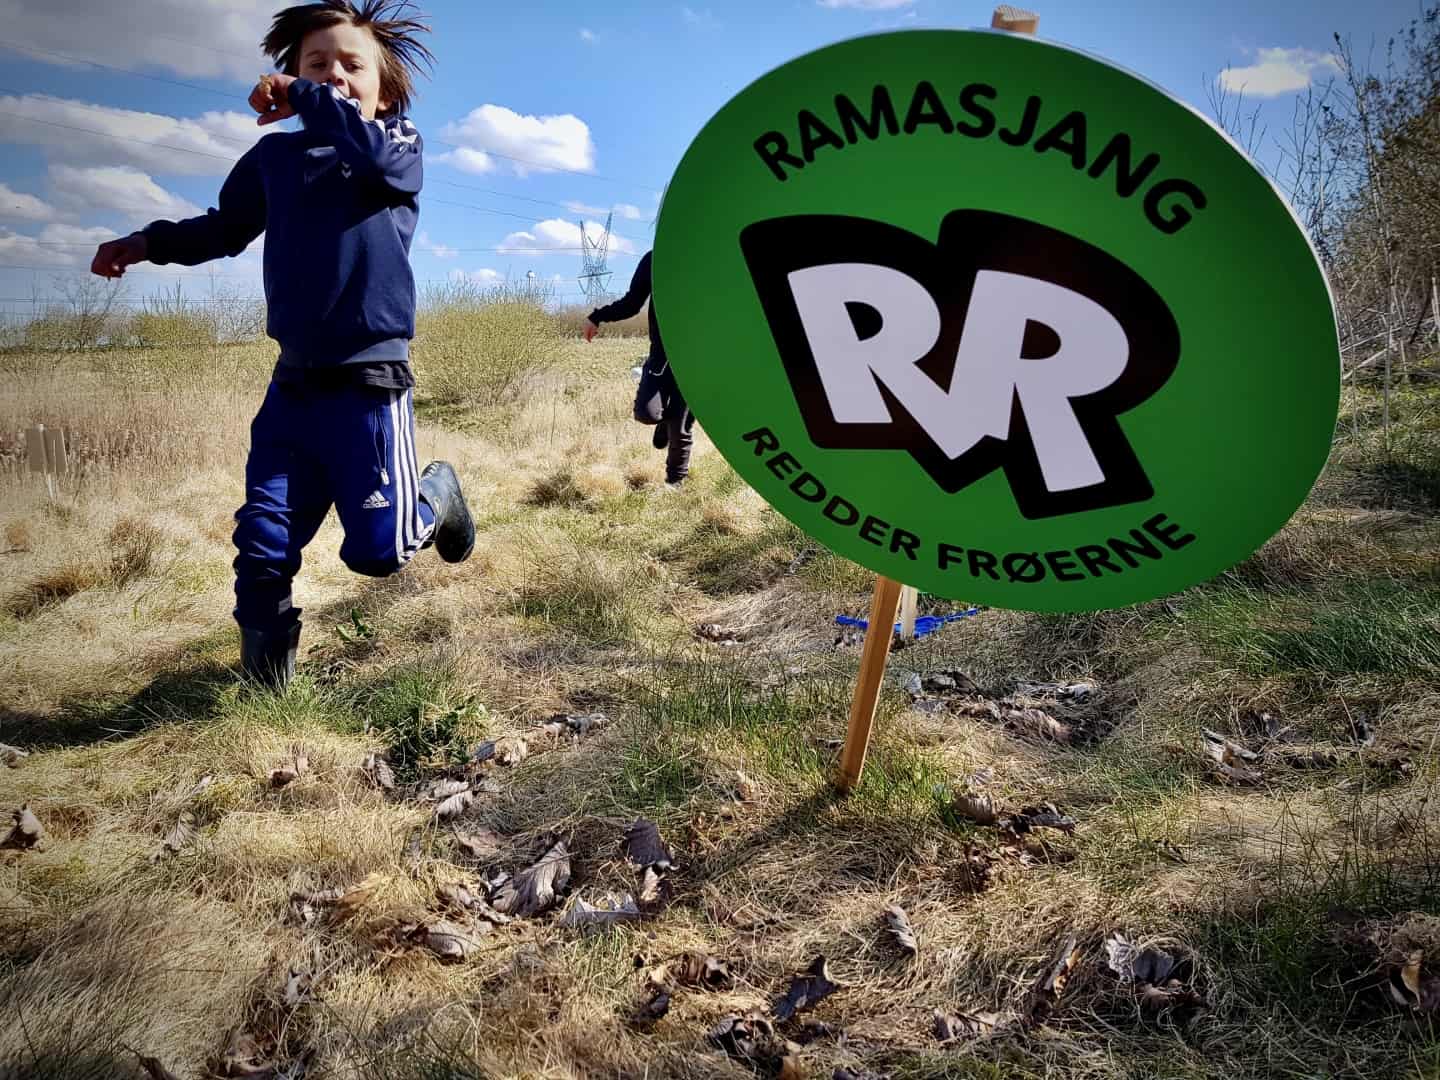 Hjemland serie Snazzy Ramasjang redder frøerne' i Vissenbjerg: - Jeg vil også se den grønne! |  ugeavisen.dk